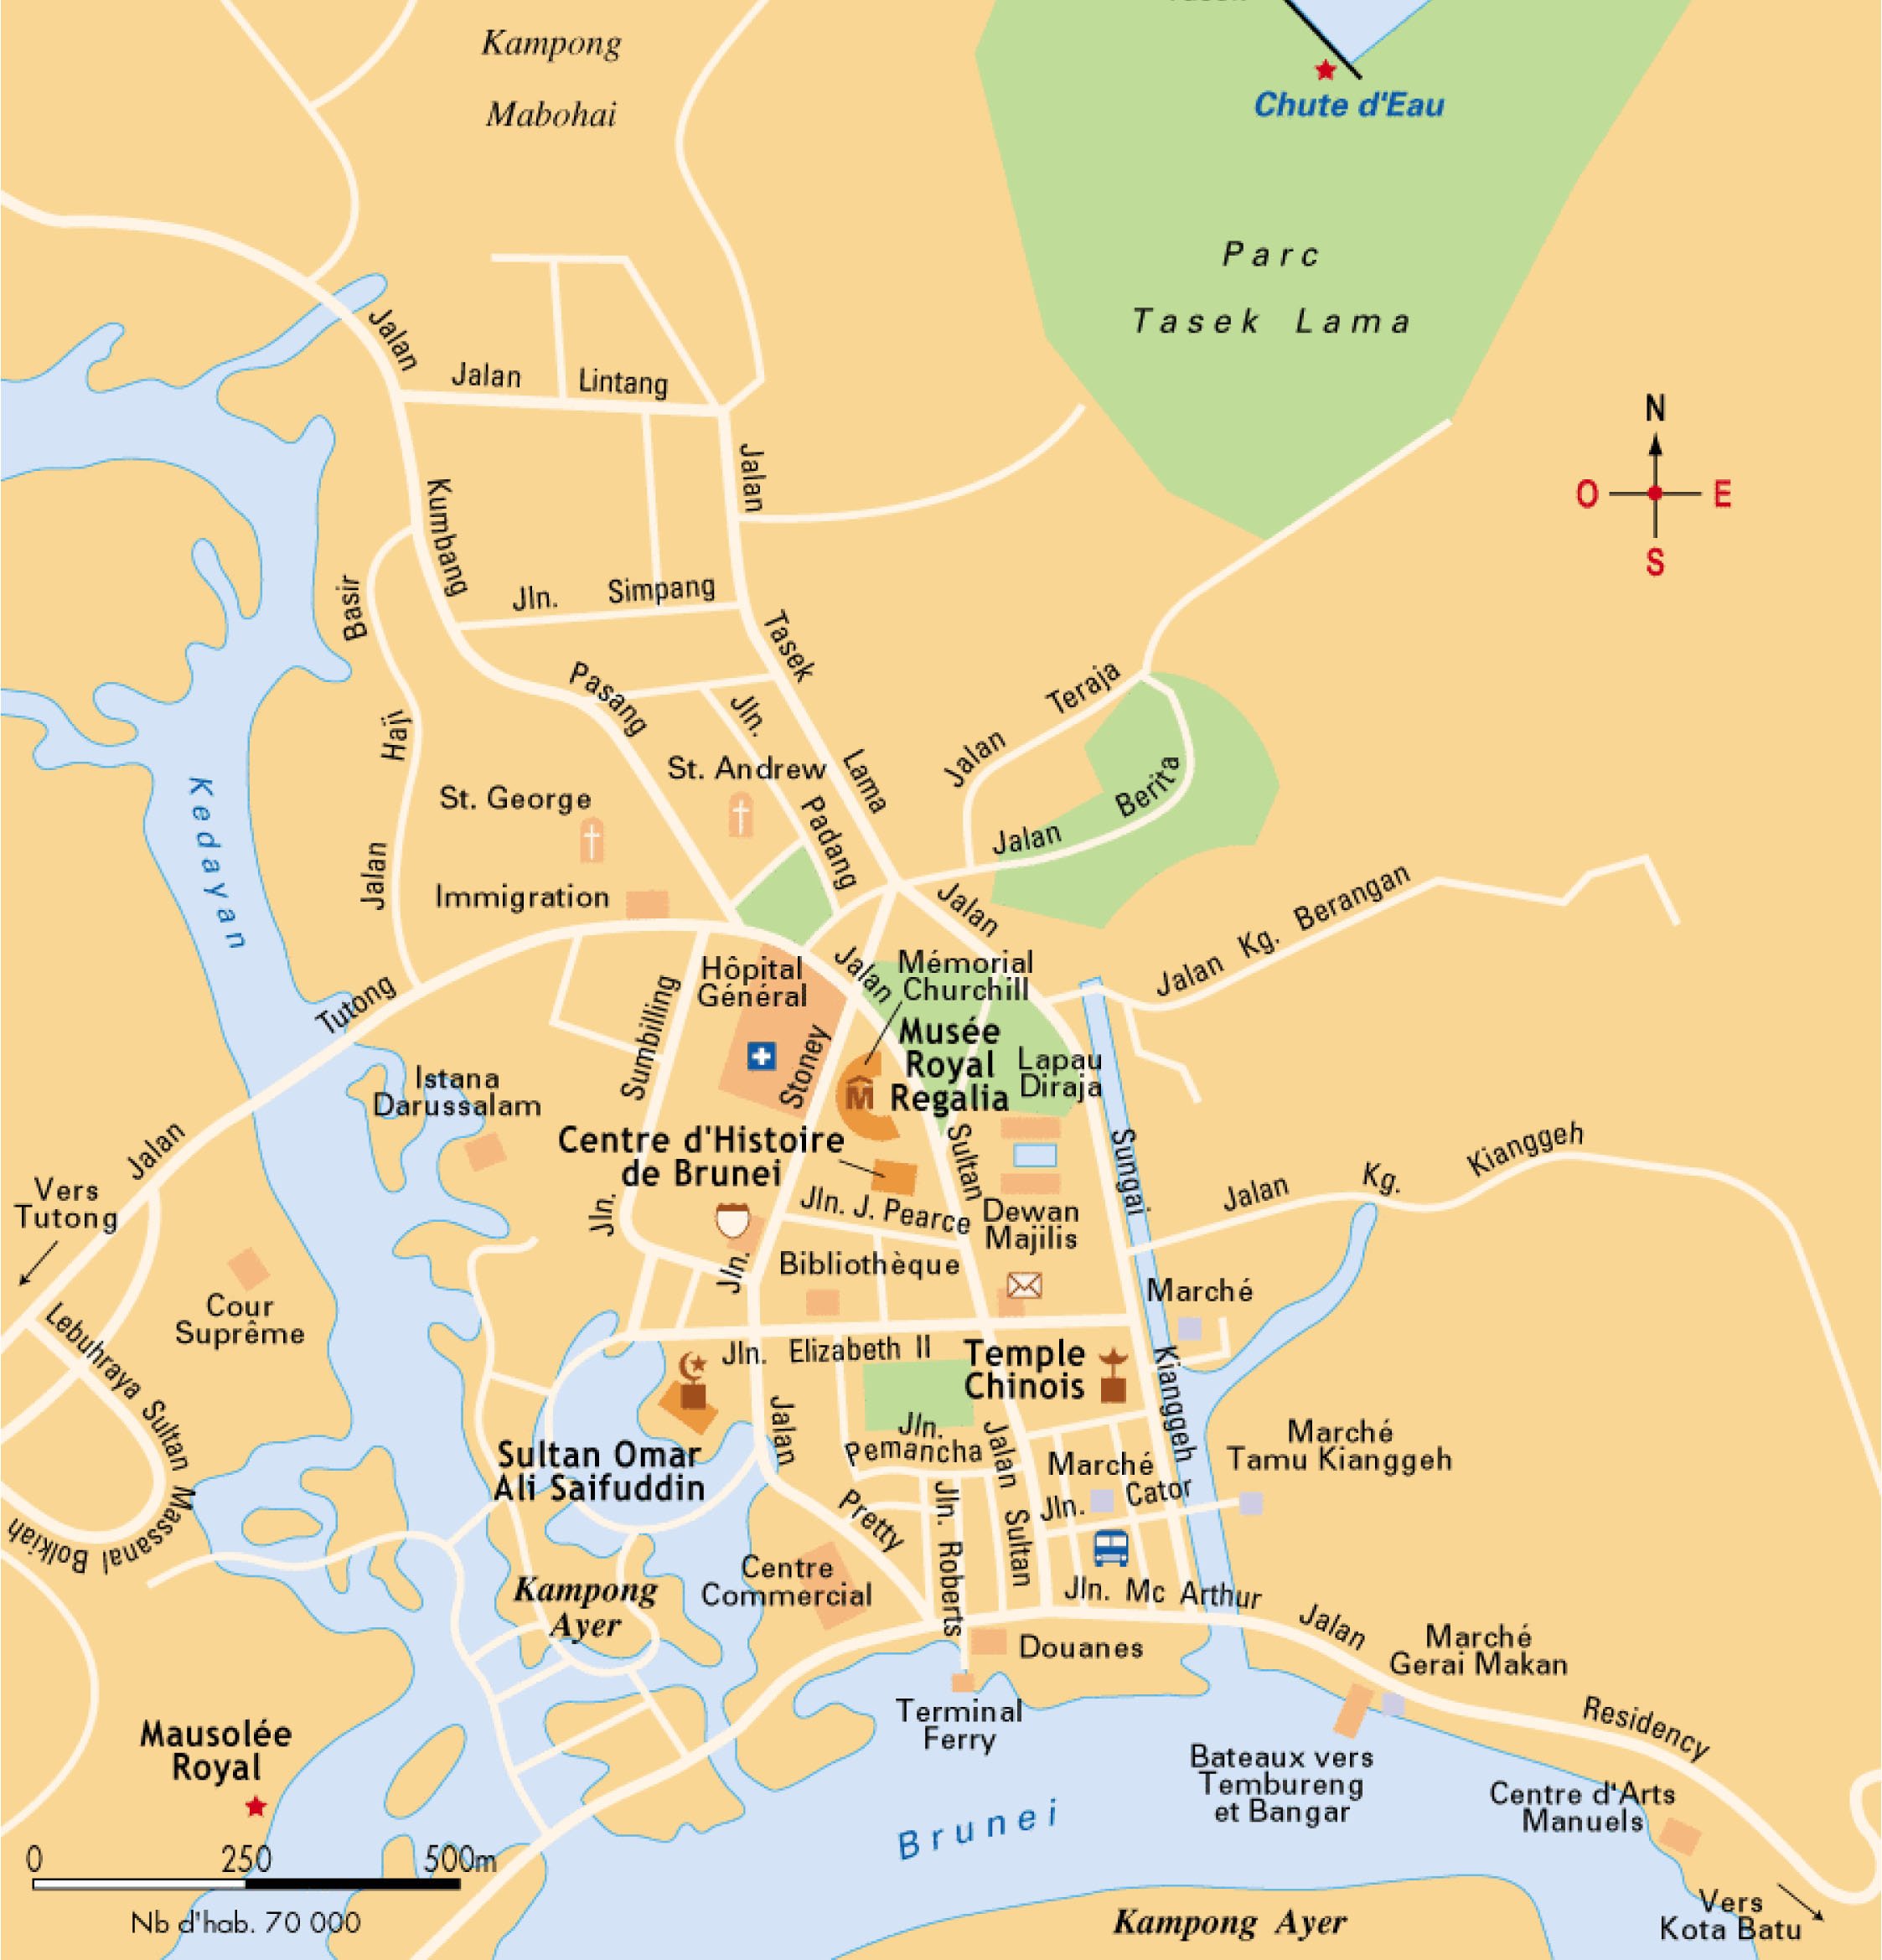 Bandar Seri Begawan Map 2 